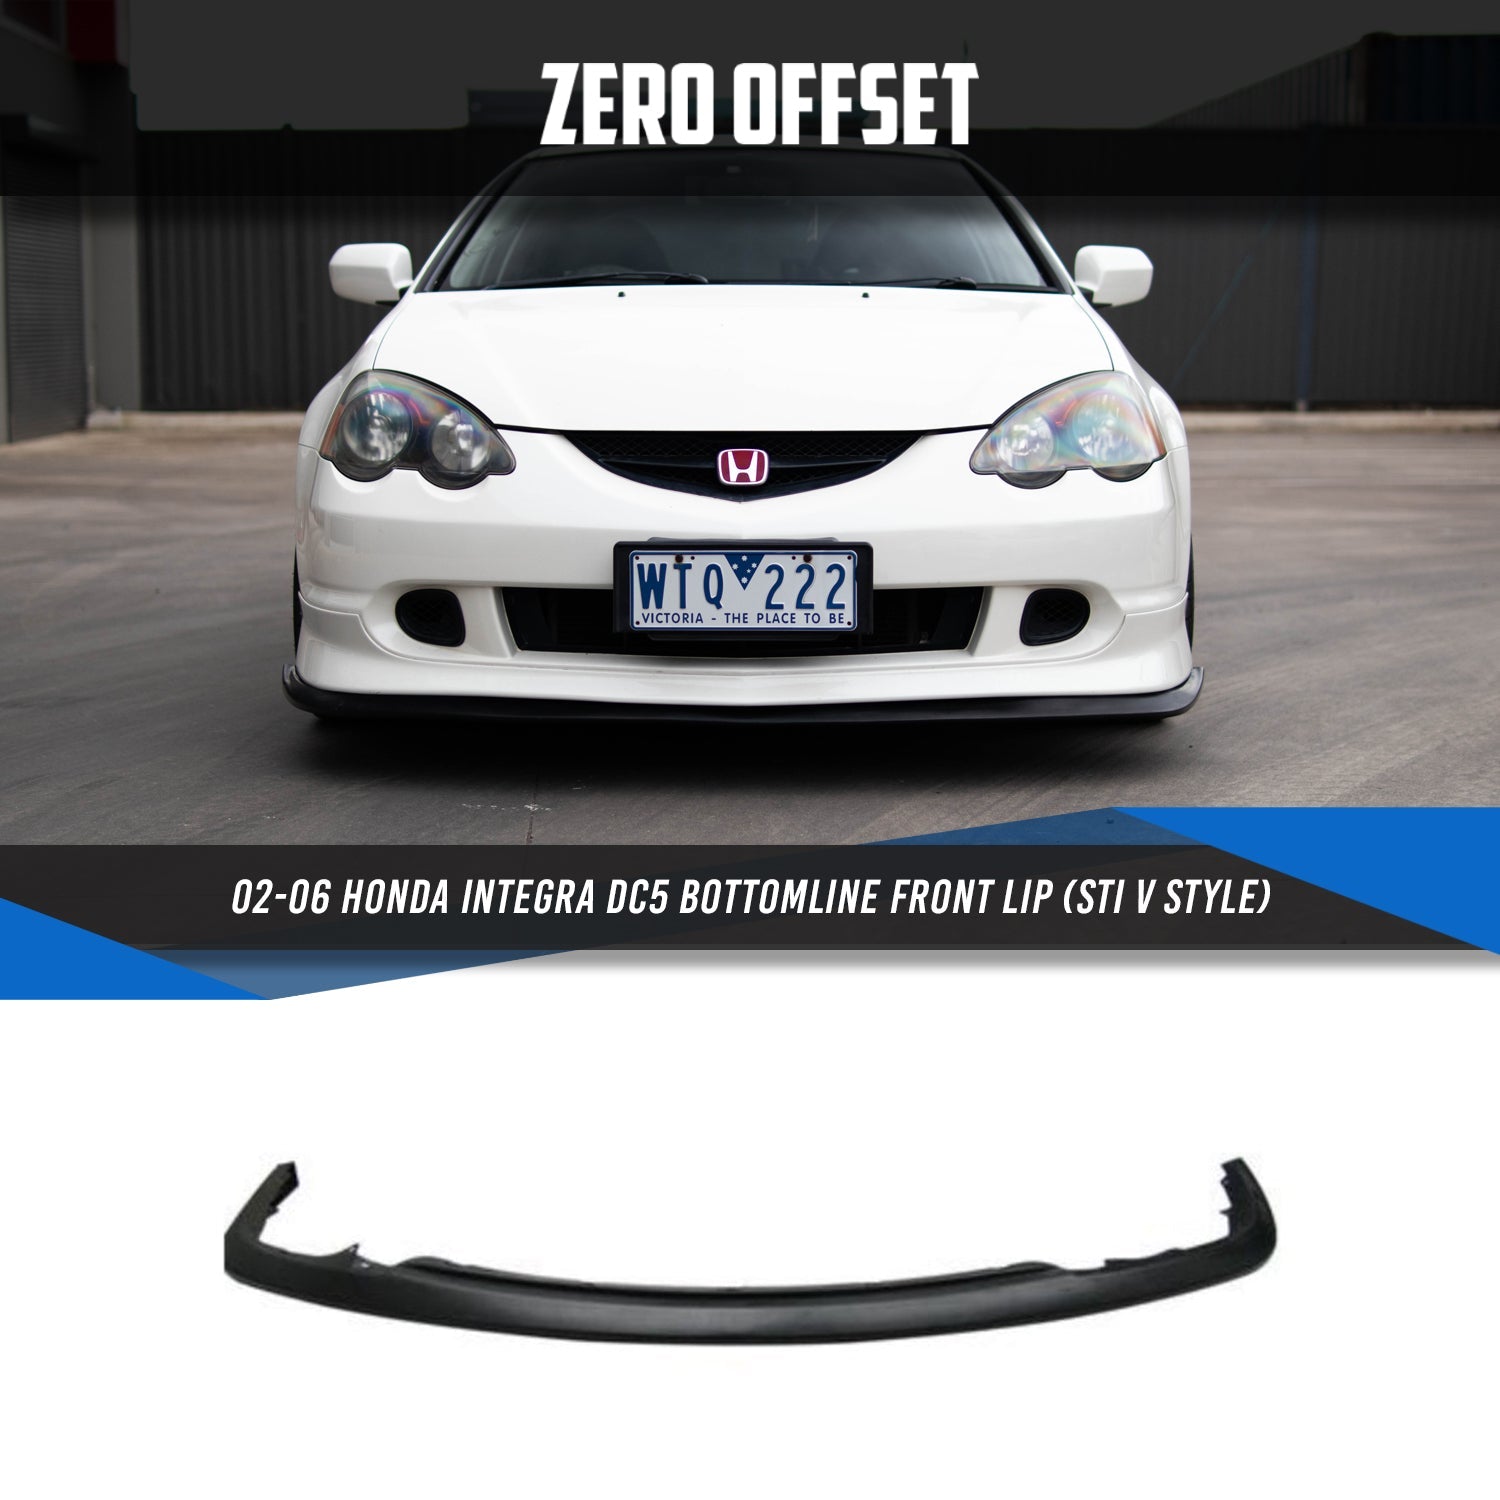 Zero Offset  Bottomline Front Lip (STI V Style) for 02-06 Honda Integra DC5 - MODE Auto Concepts